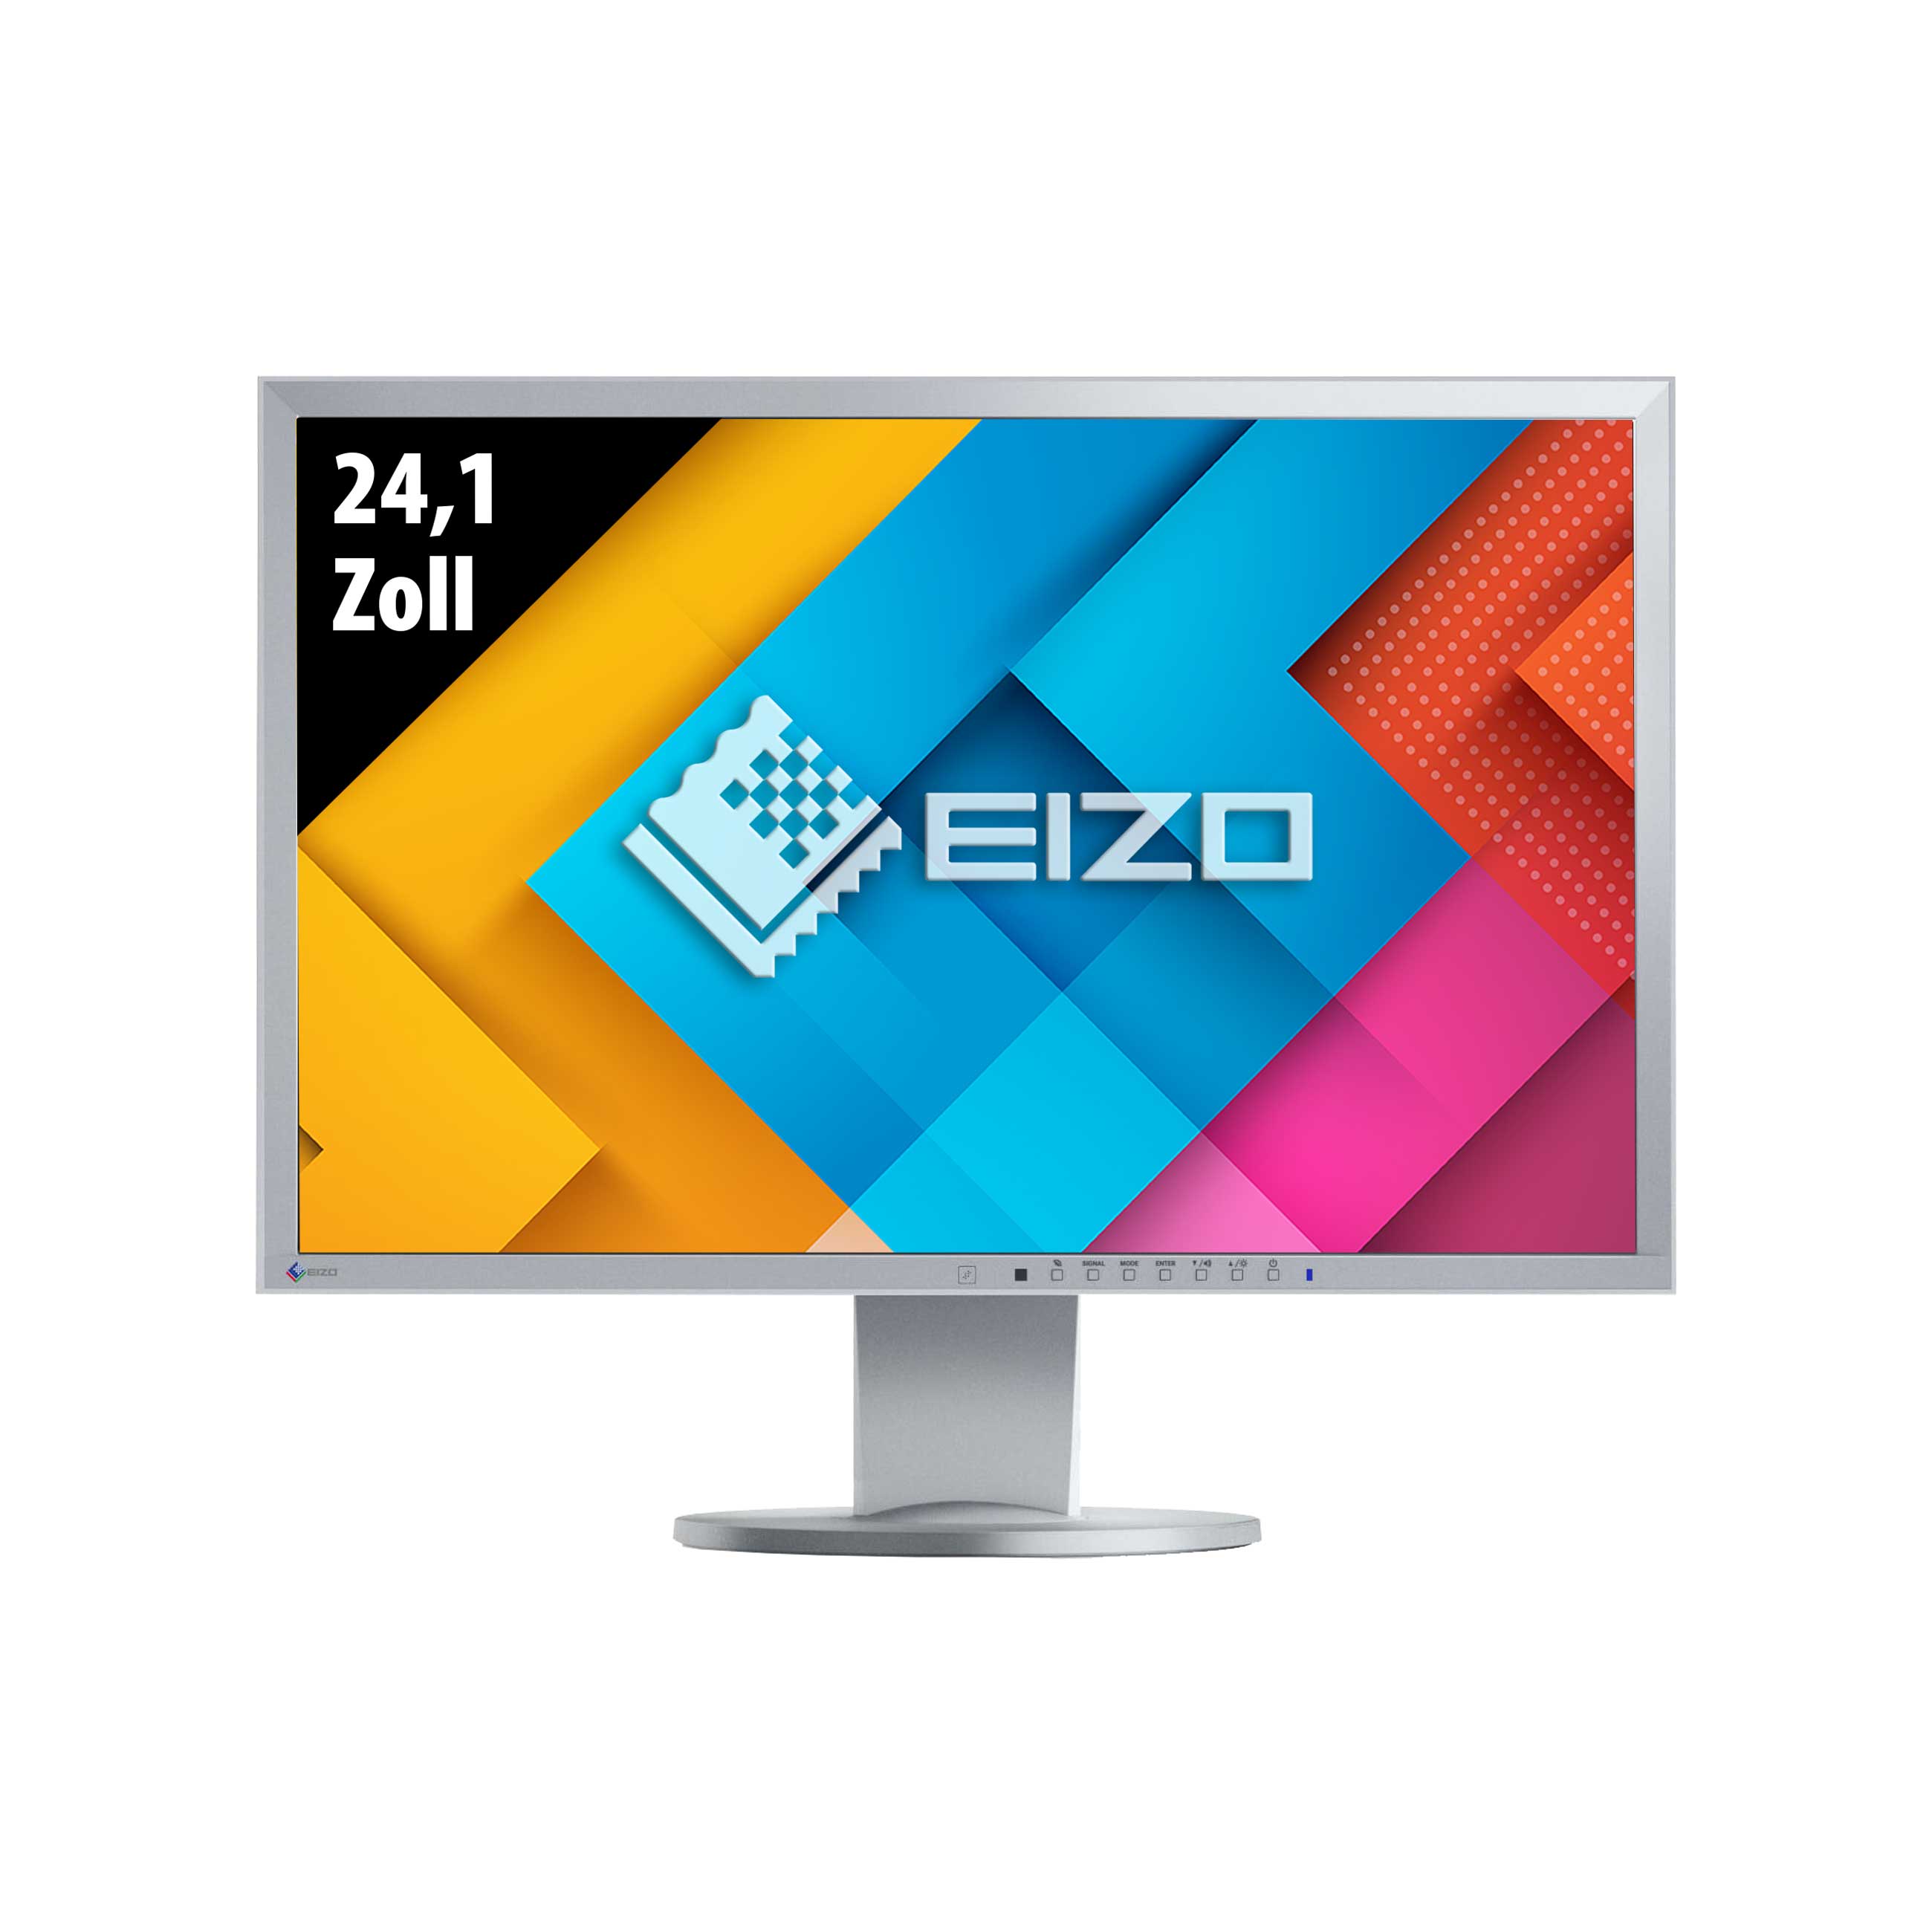 Eizo FlexScan EV2416W-GY - 1920 x 1200 - WUXGA - 24,1 Zoll - 5 ms - Grau